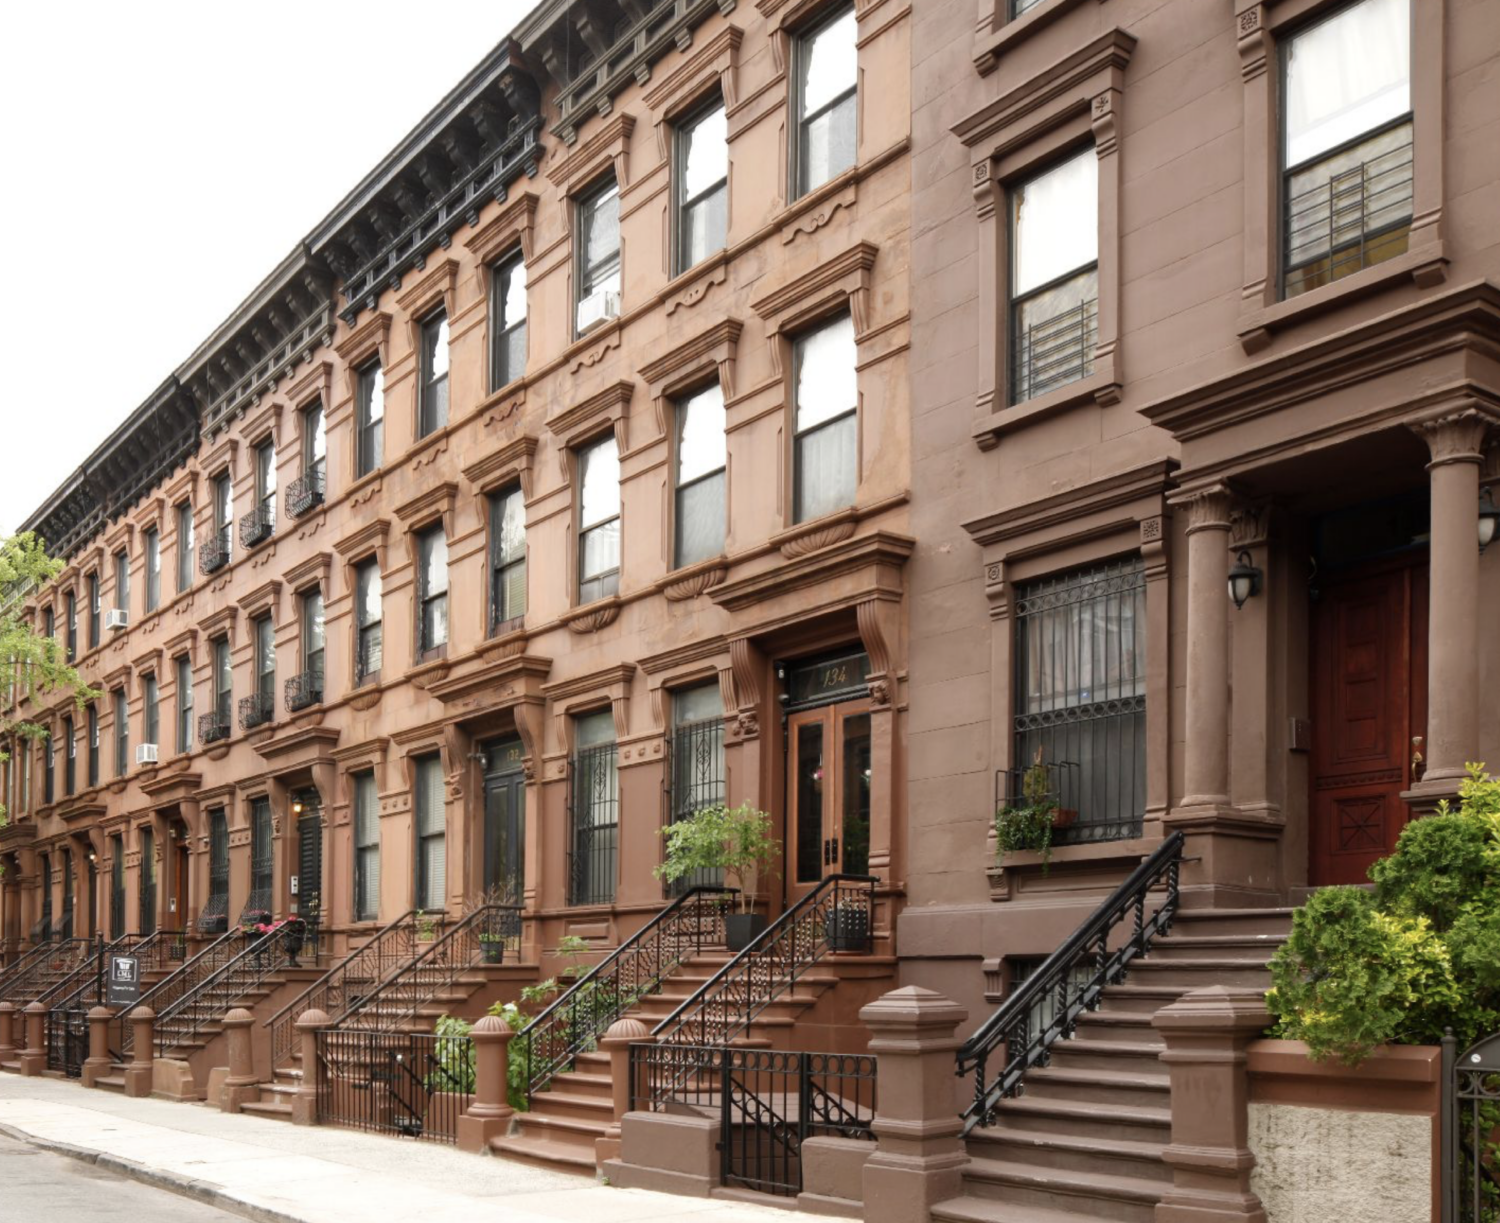 West 131st Street in the Central Harlem North Historic District, via NYC Landmarks Preservation Commission